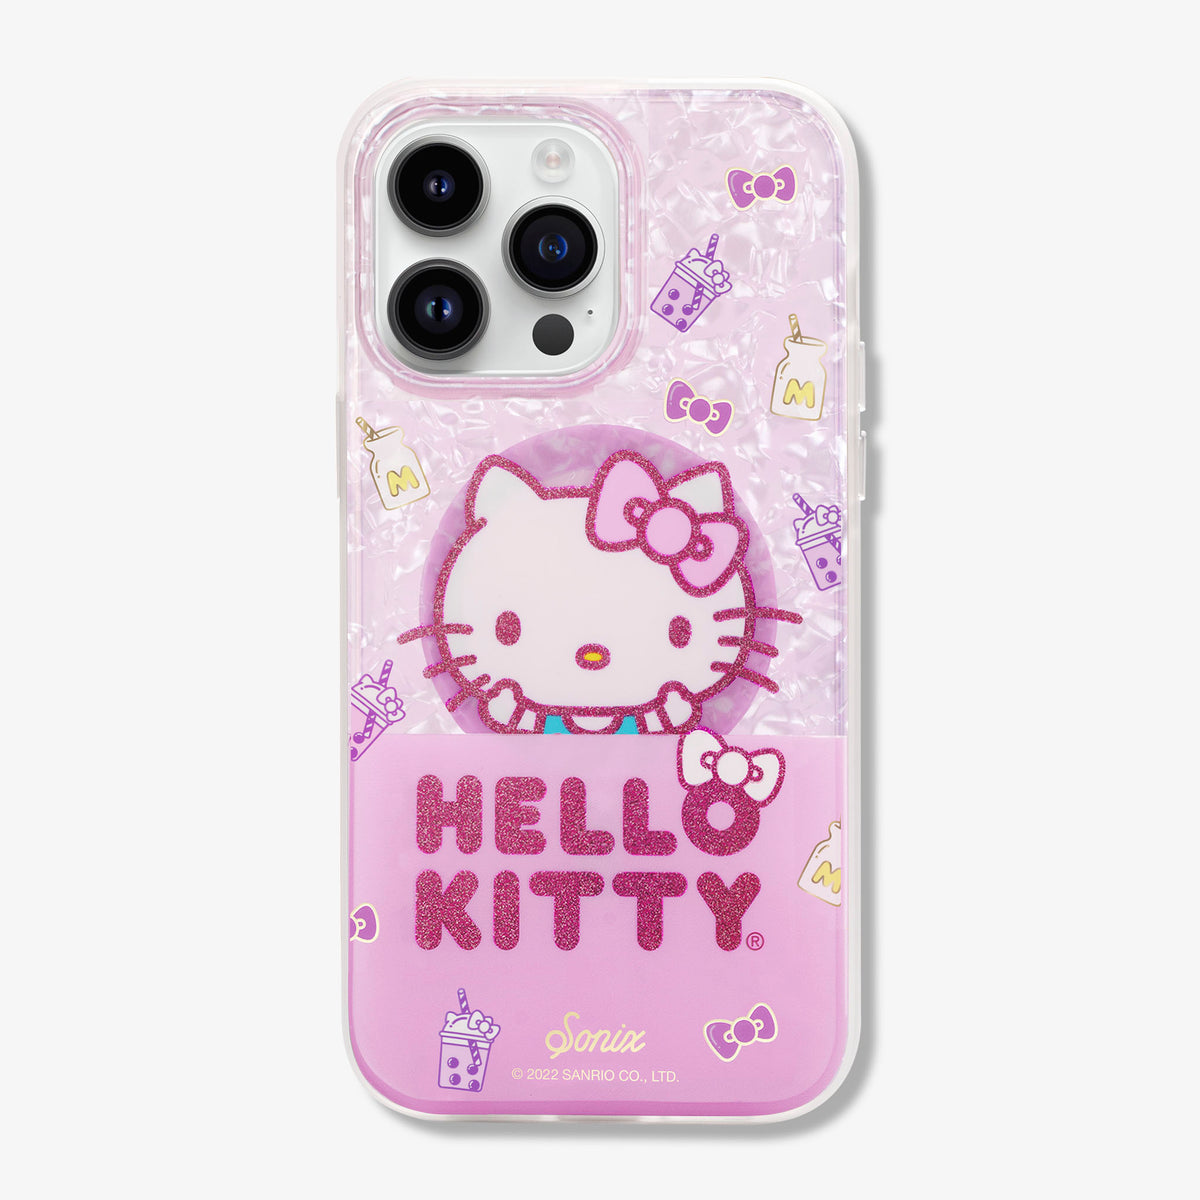 Hello Kitty x Sonix Strawberry Milk iPhone Case